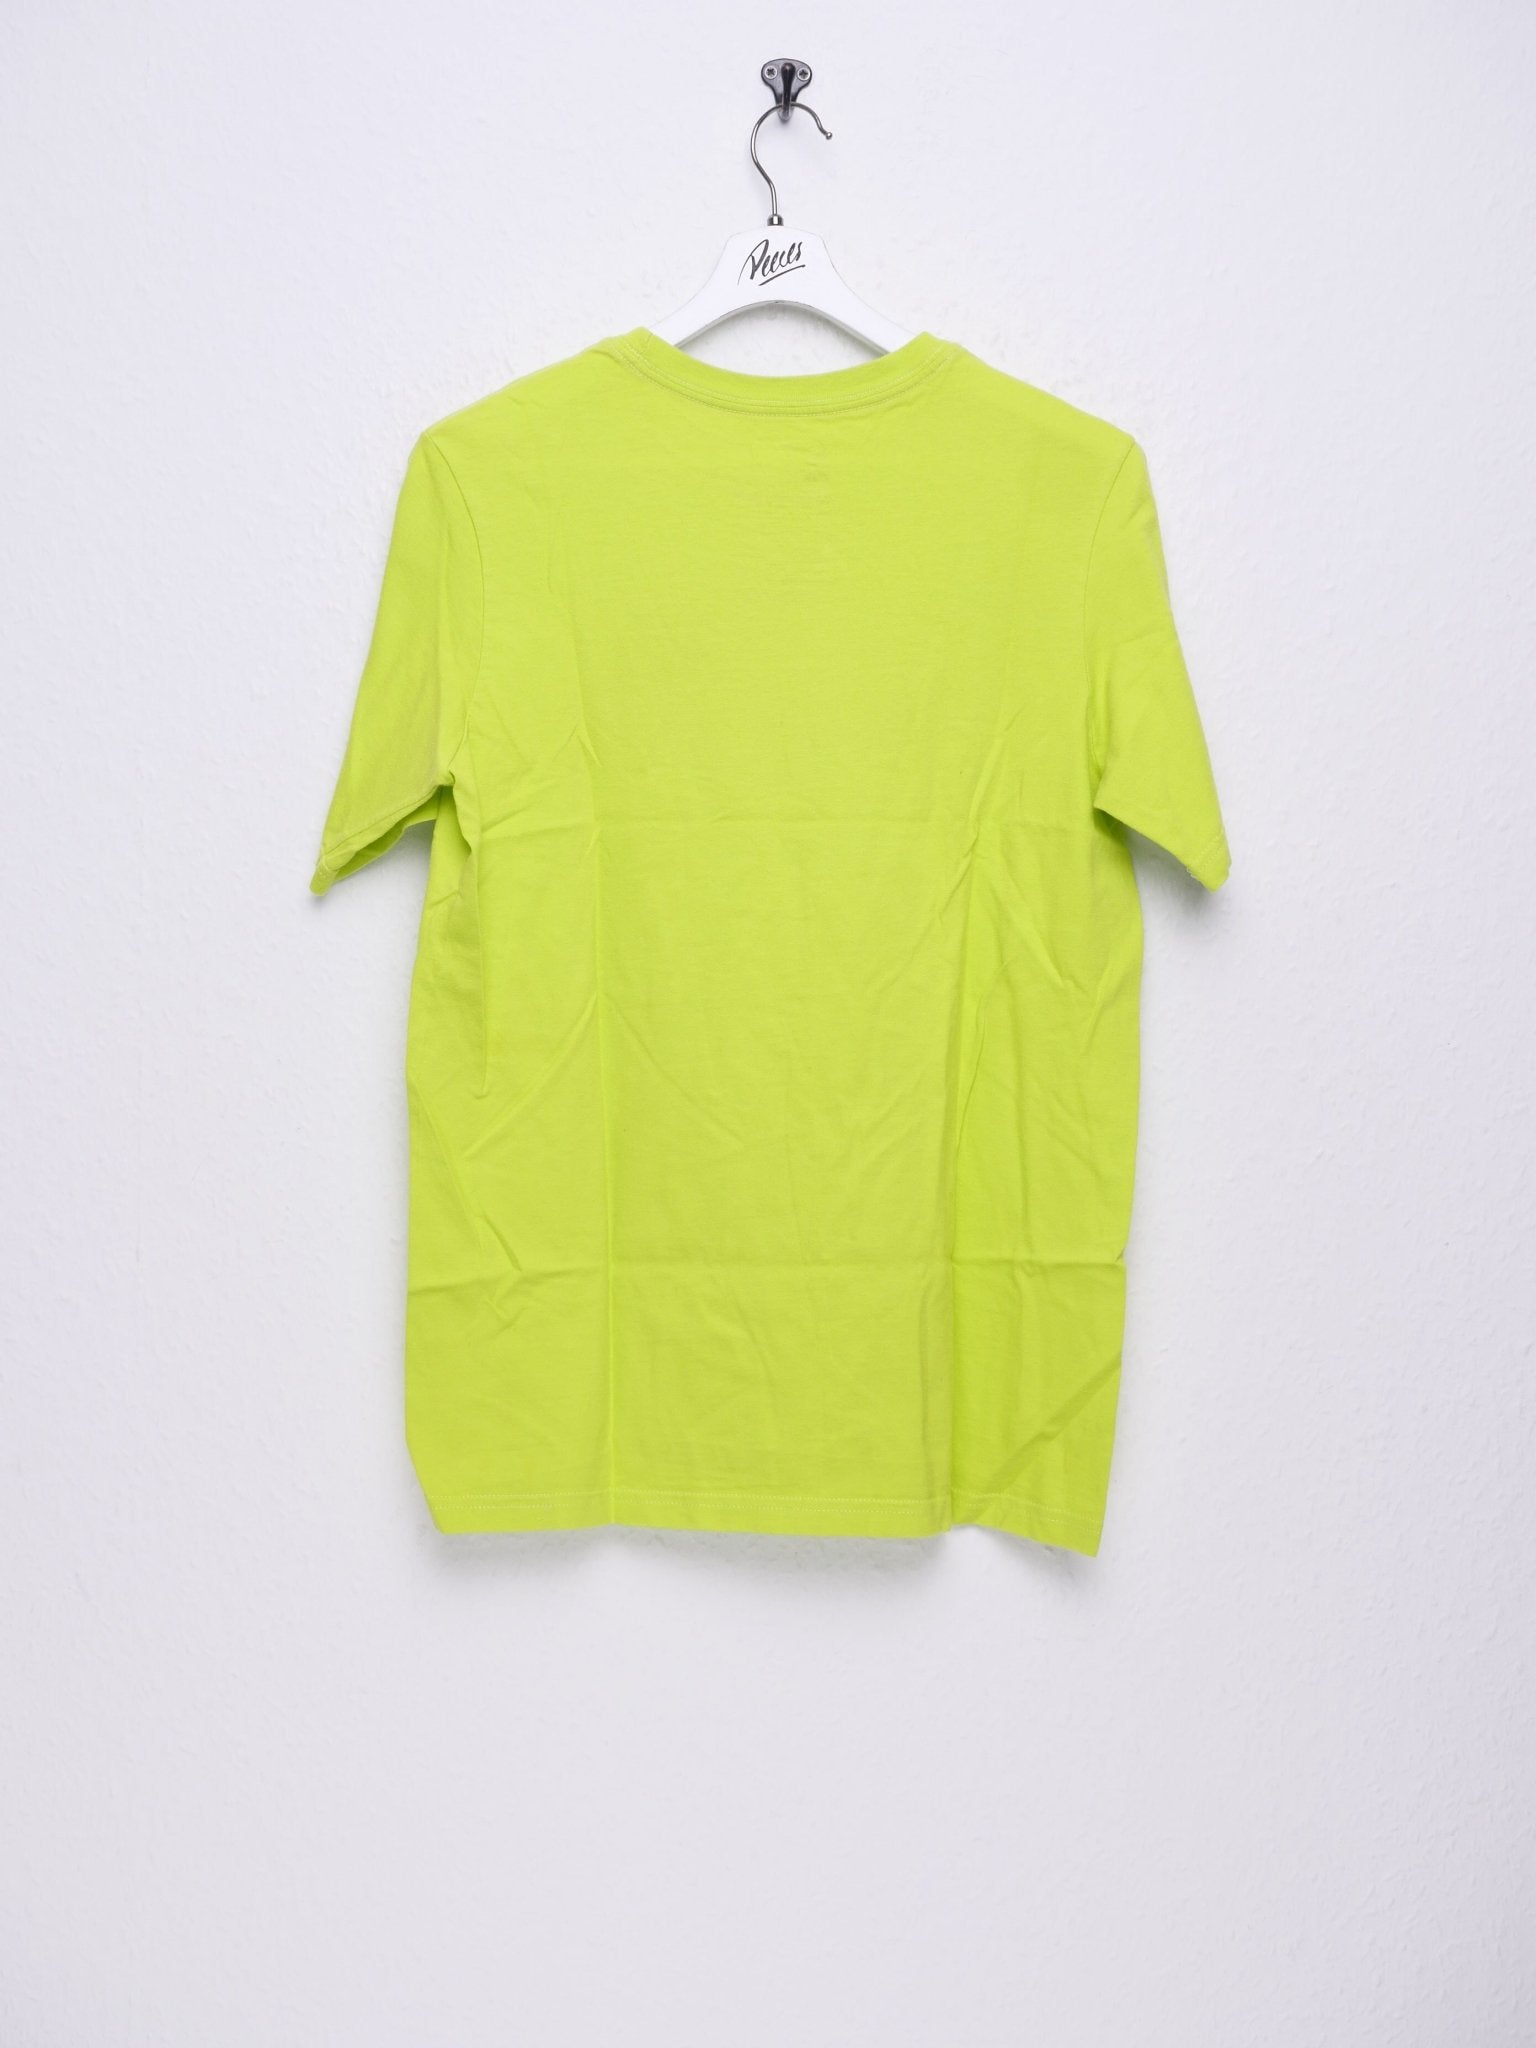 Nike printed Logo neon Shirt - Peeces